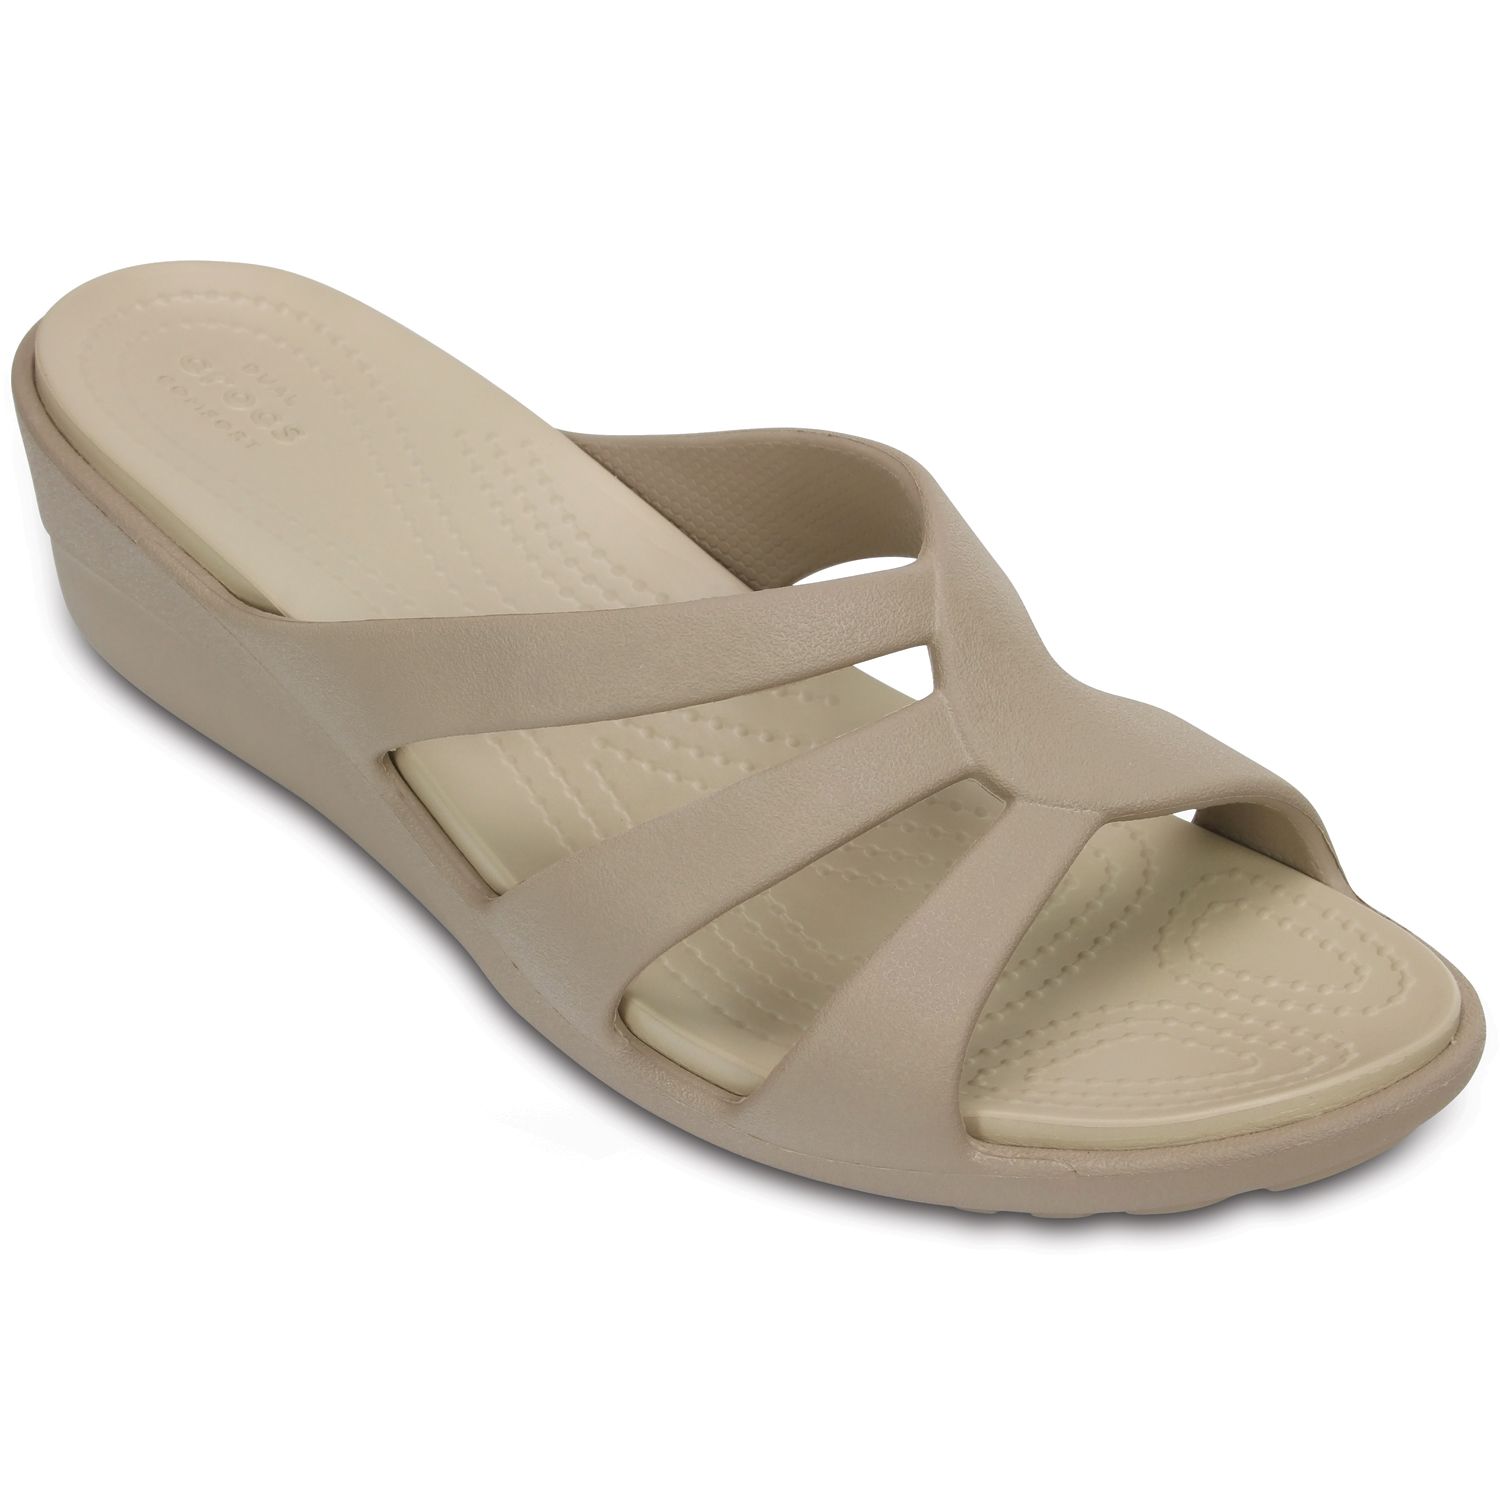 croc wedge sandals